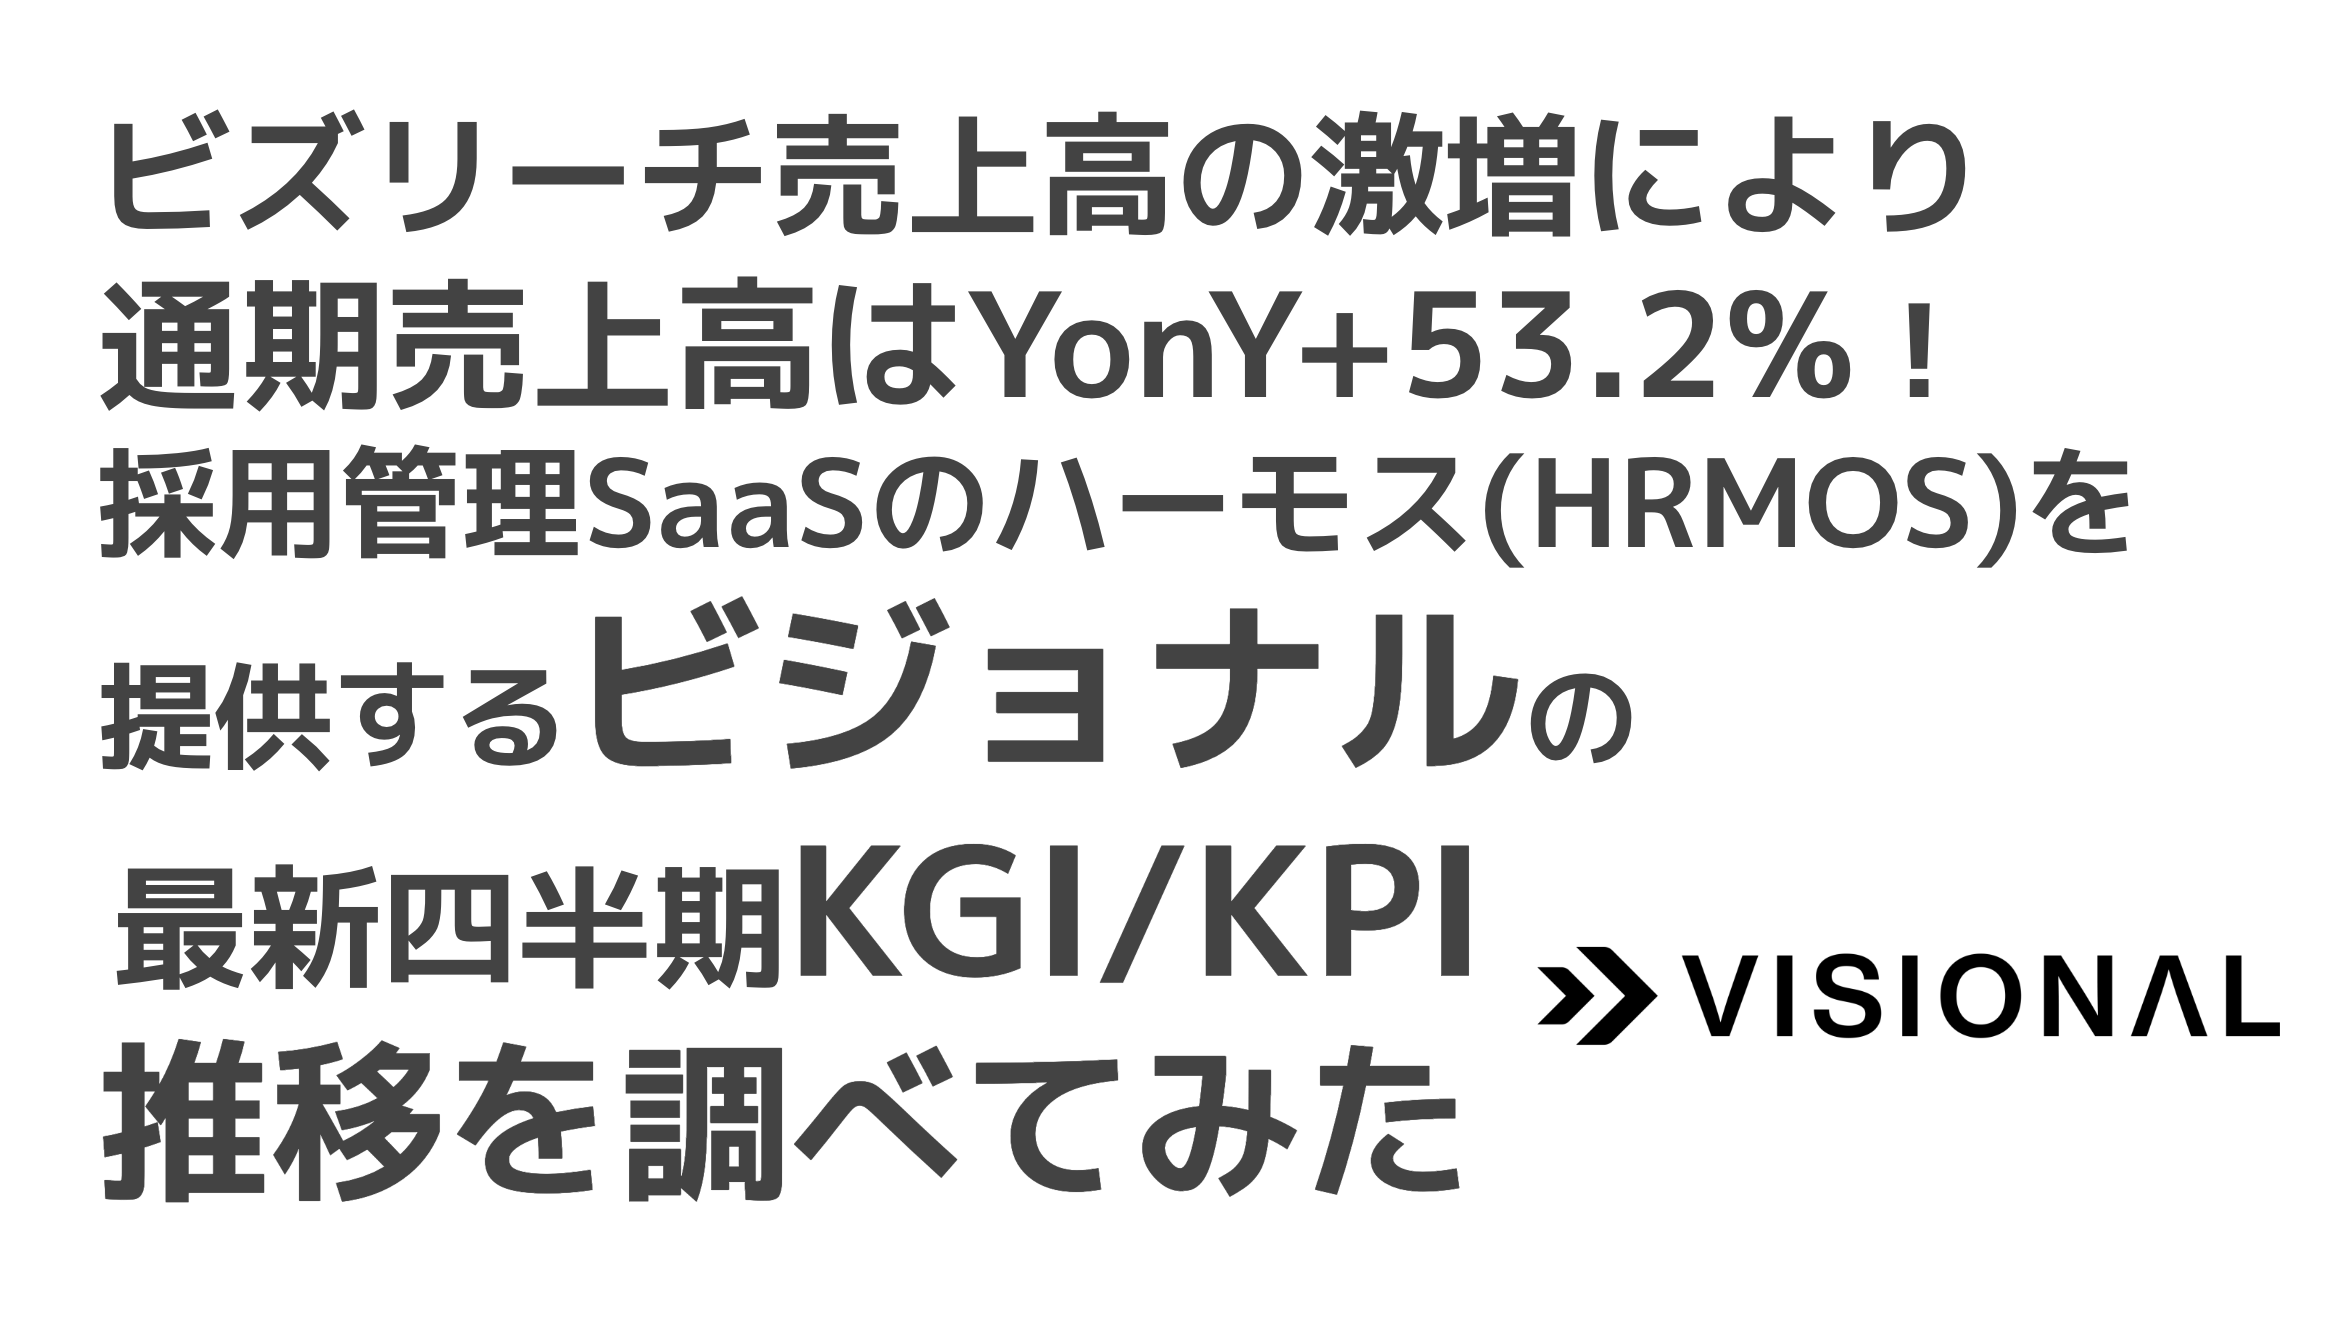 saaslife_ビズリーチ売上高の激増により通期売上高はYonY+53.2%！採用管理SaaSのハーモス(HRMOS)を提供するビジョナルの最新四半期KGI/KPI推移を調べてみた